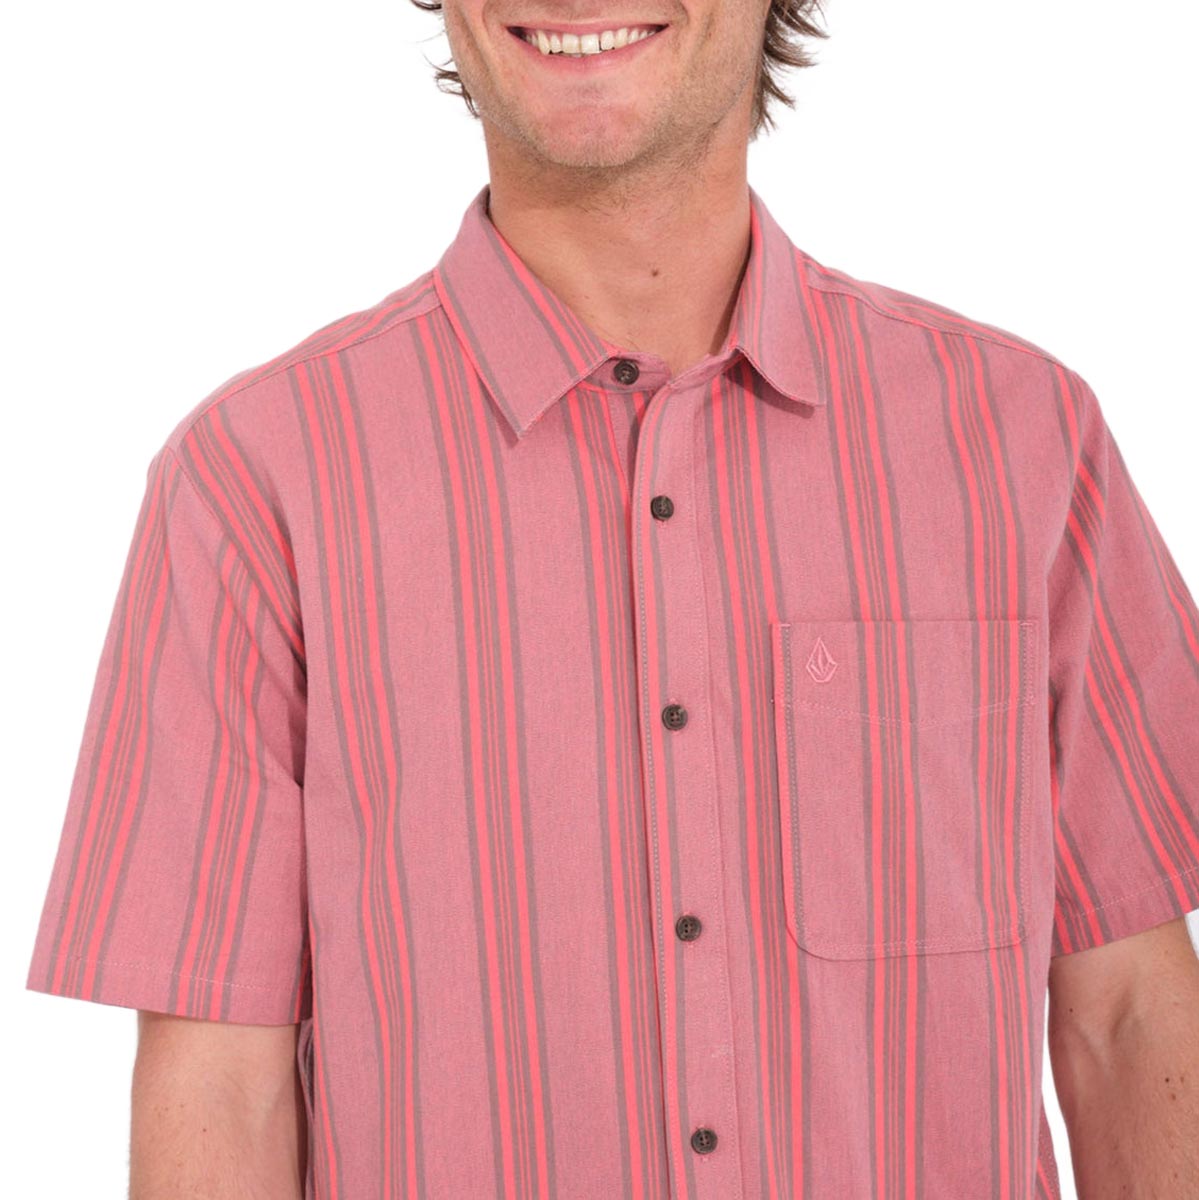 Volcom Newbar Stripe Shirt - Washed Ruby image 3